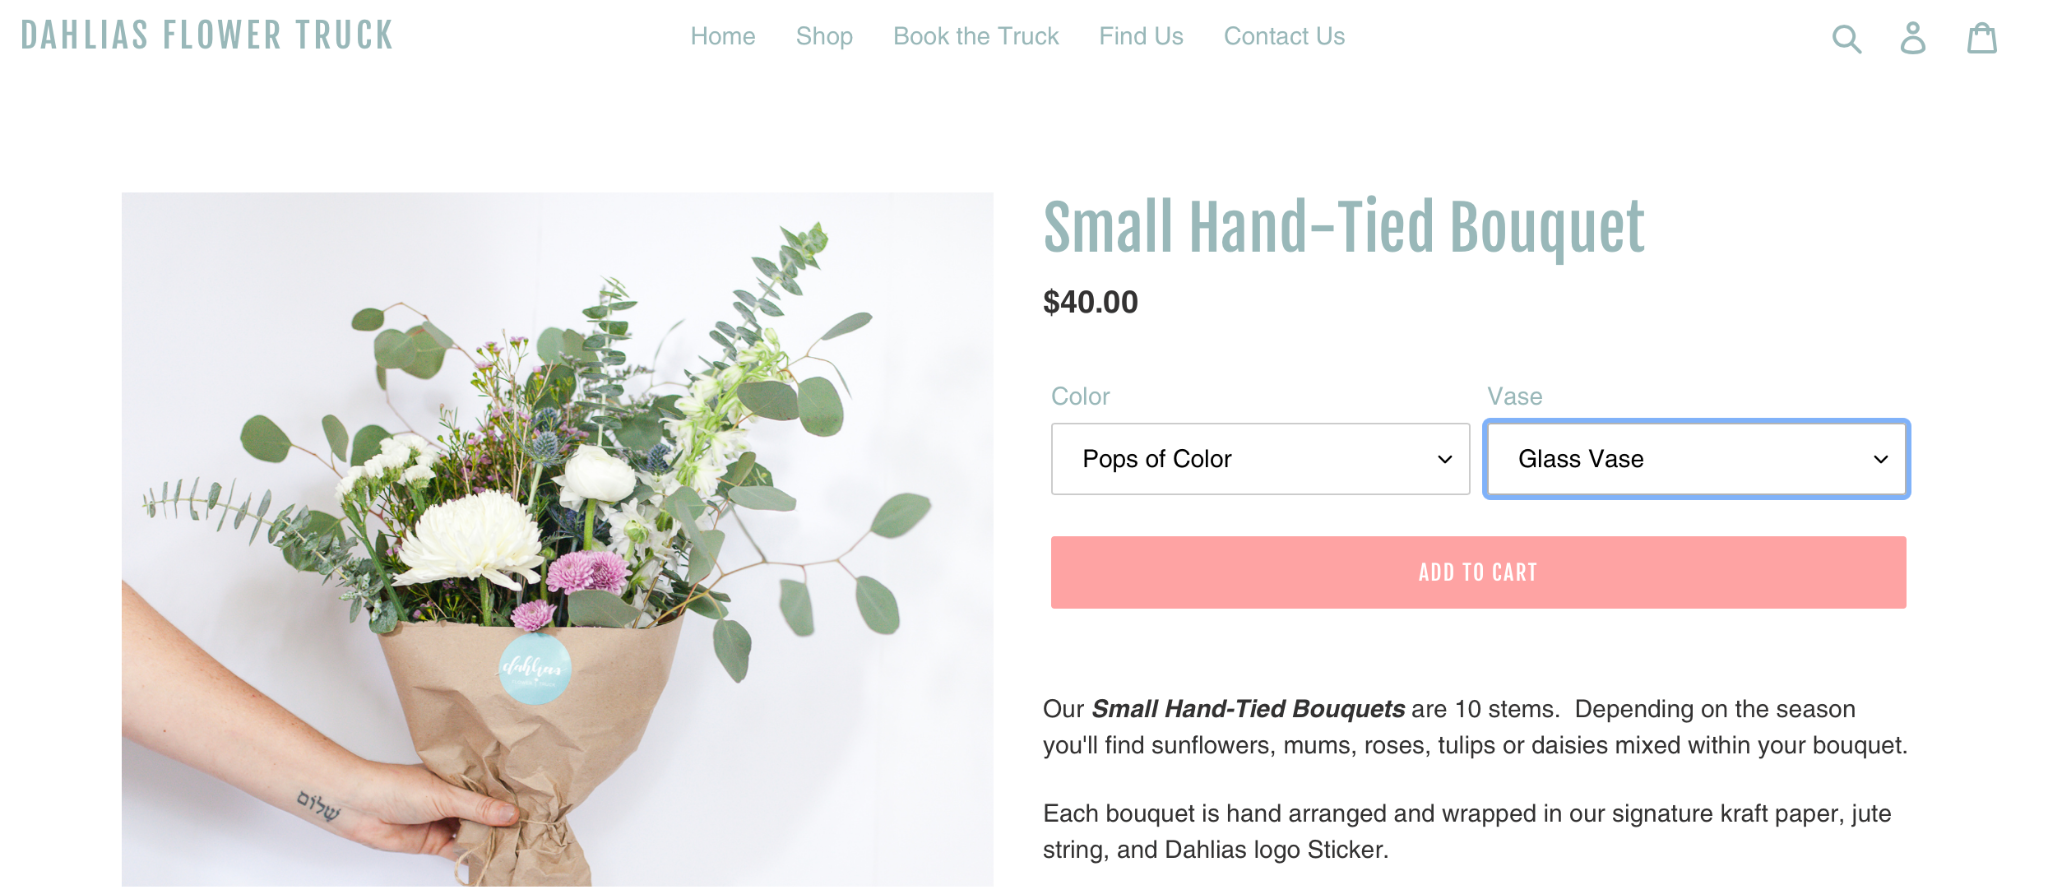 Best Upsell Examples: Dahlias Flowers Truck